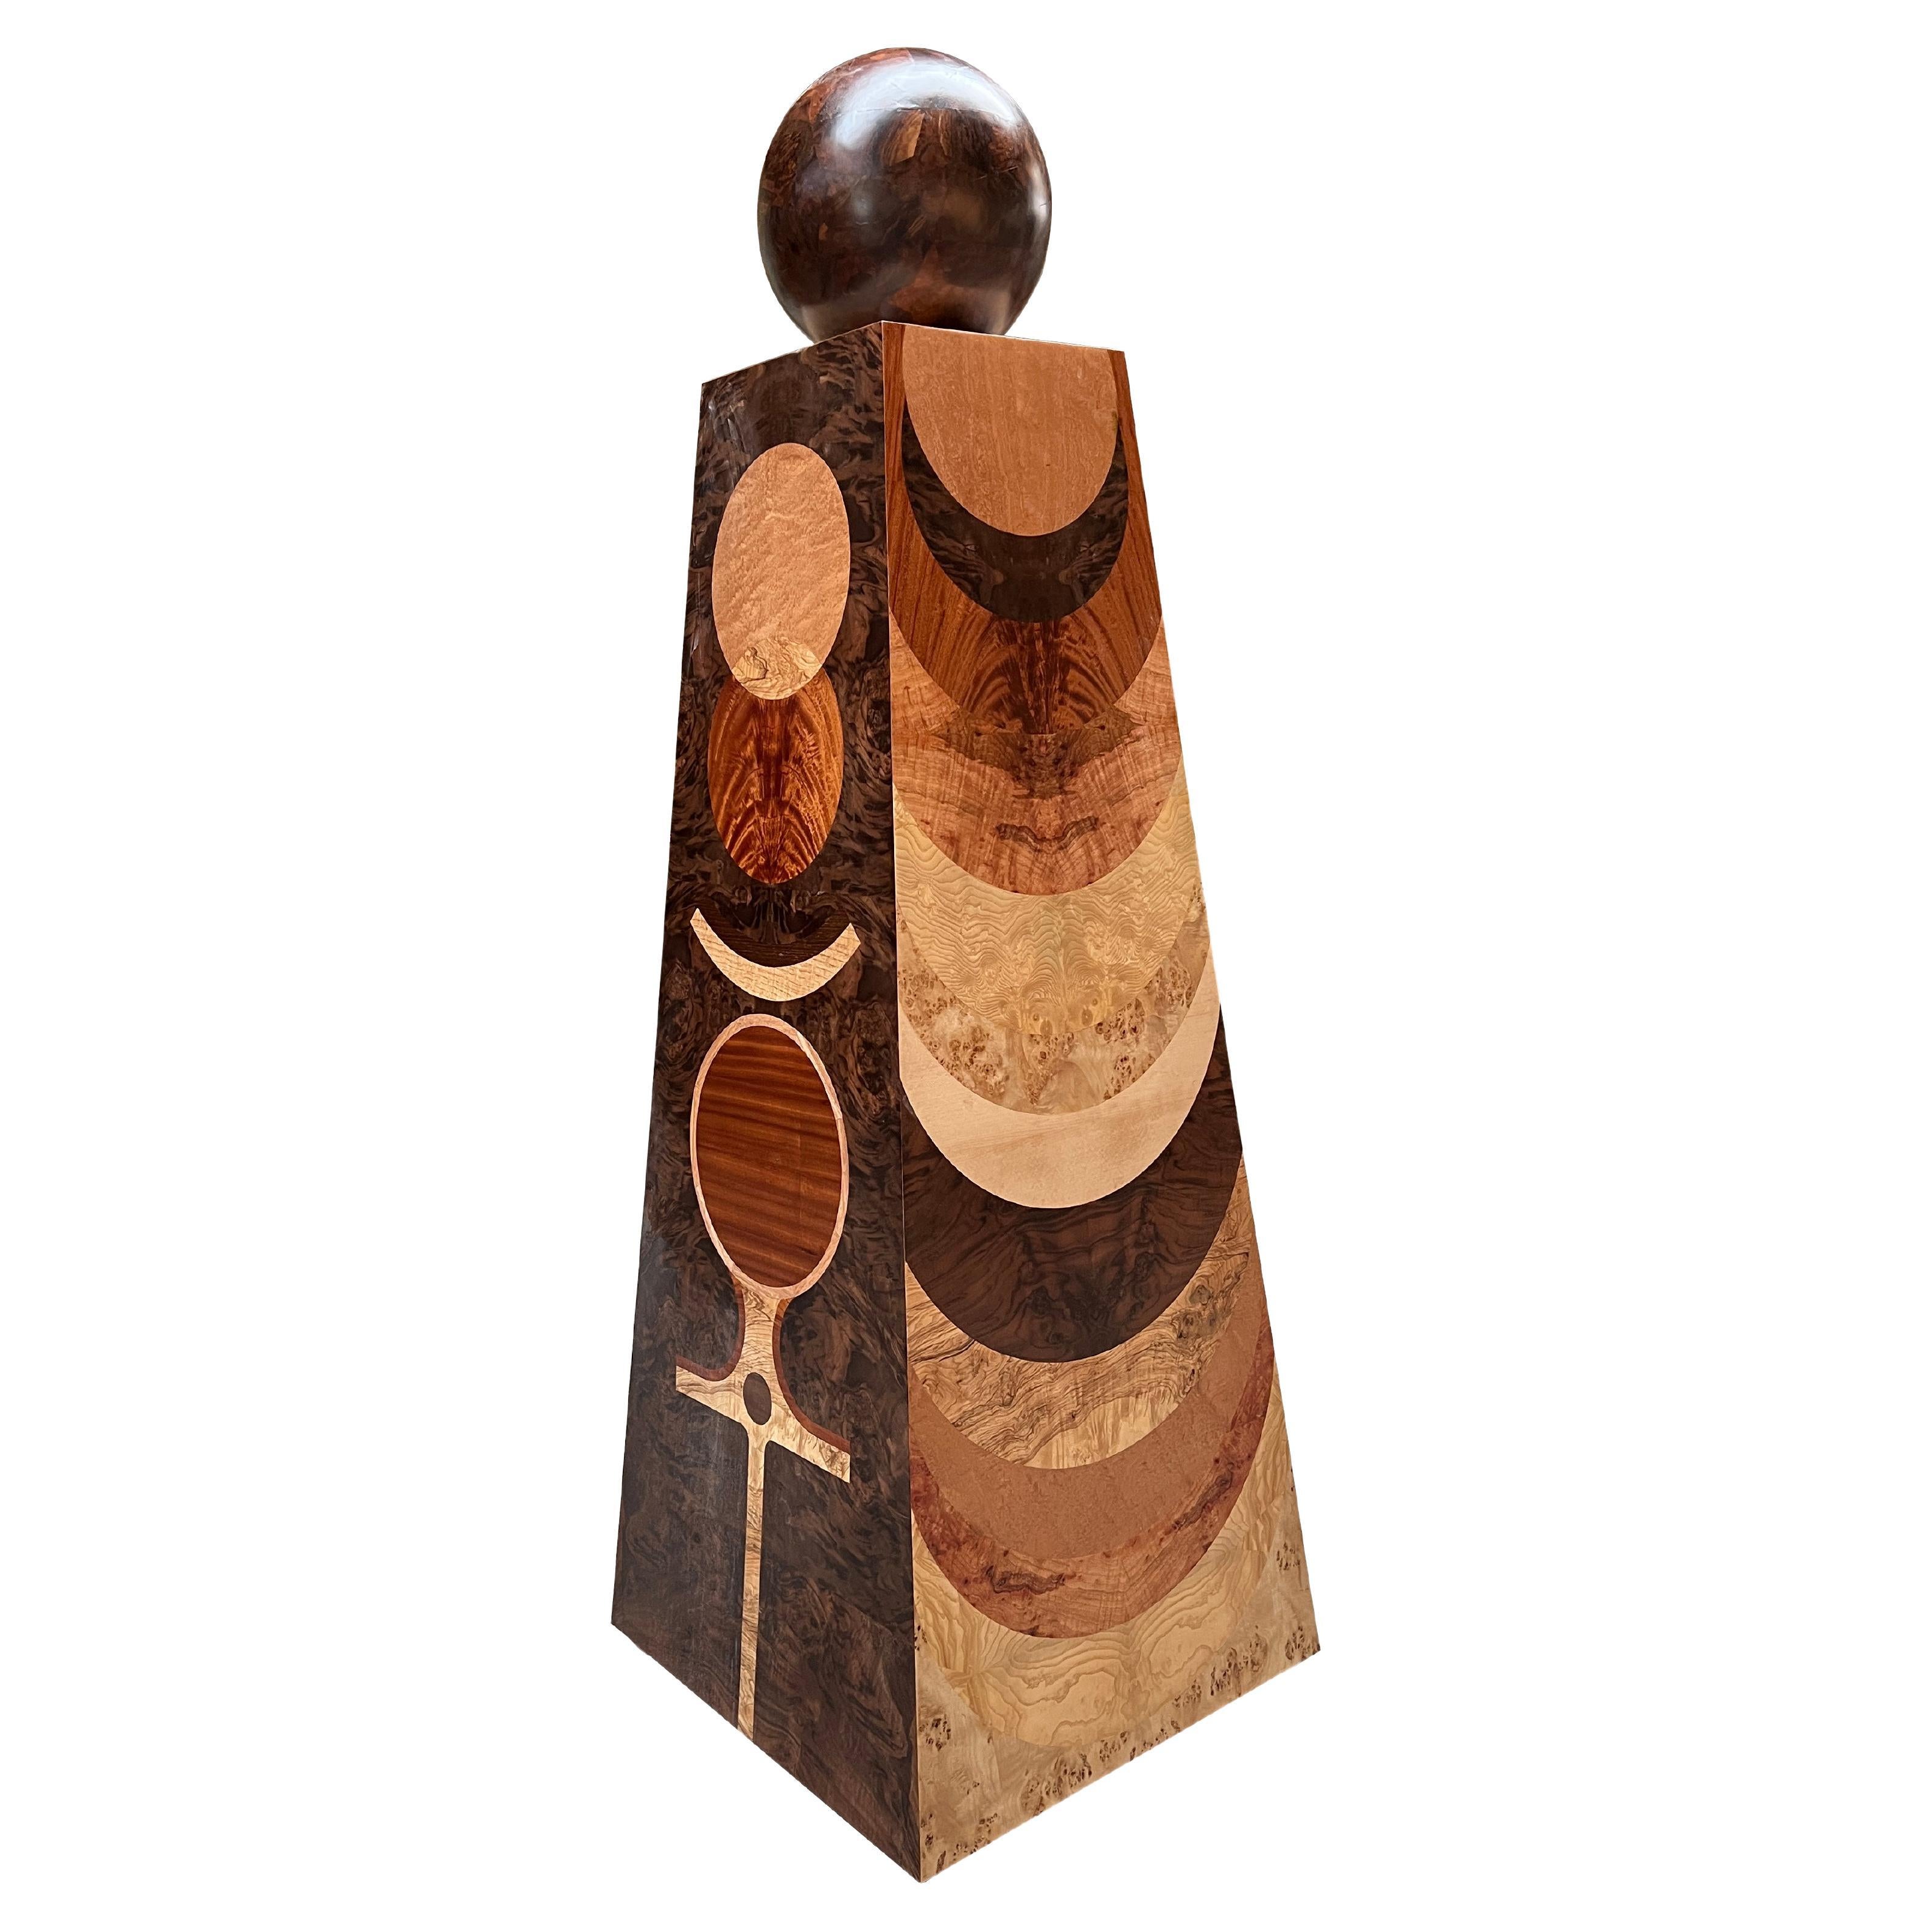 Catalina Andonie "Geoglifo I" Parquetry Wood Sculpture